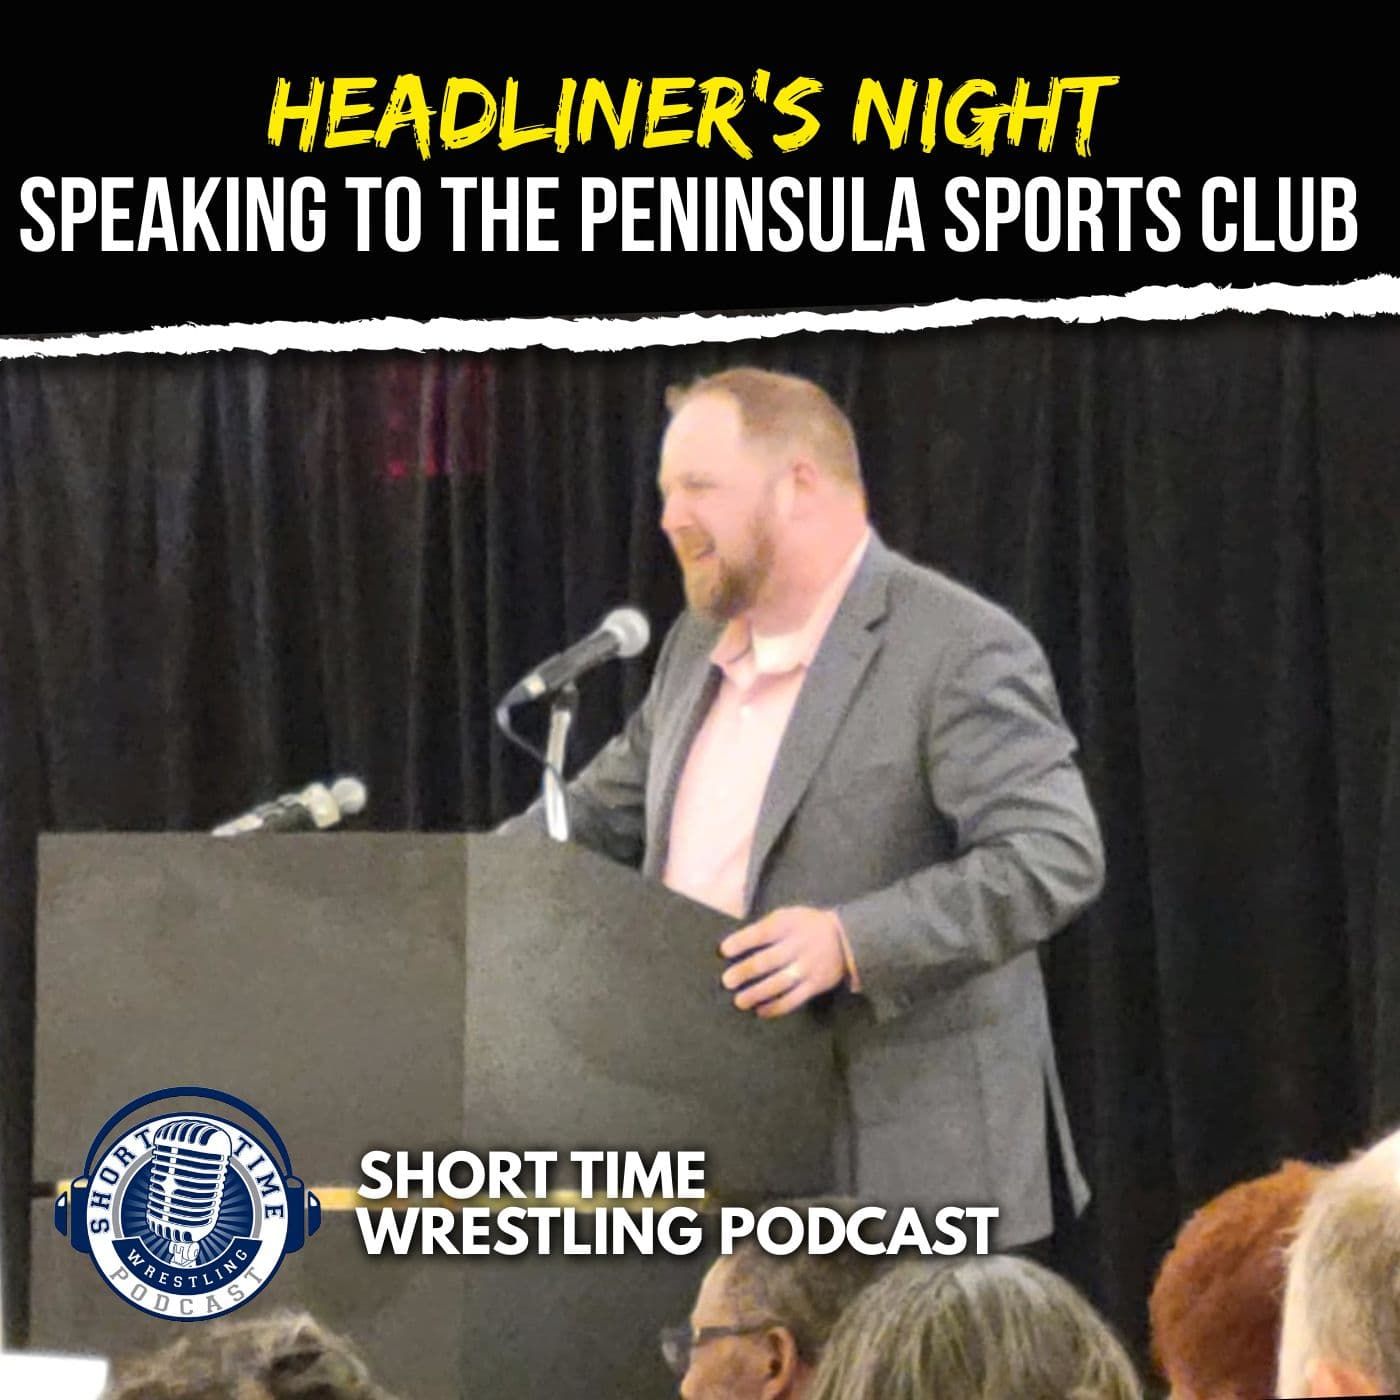 Speaking at the Peninsula Sports Club's Headliner's Night